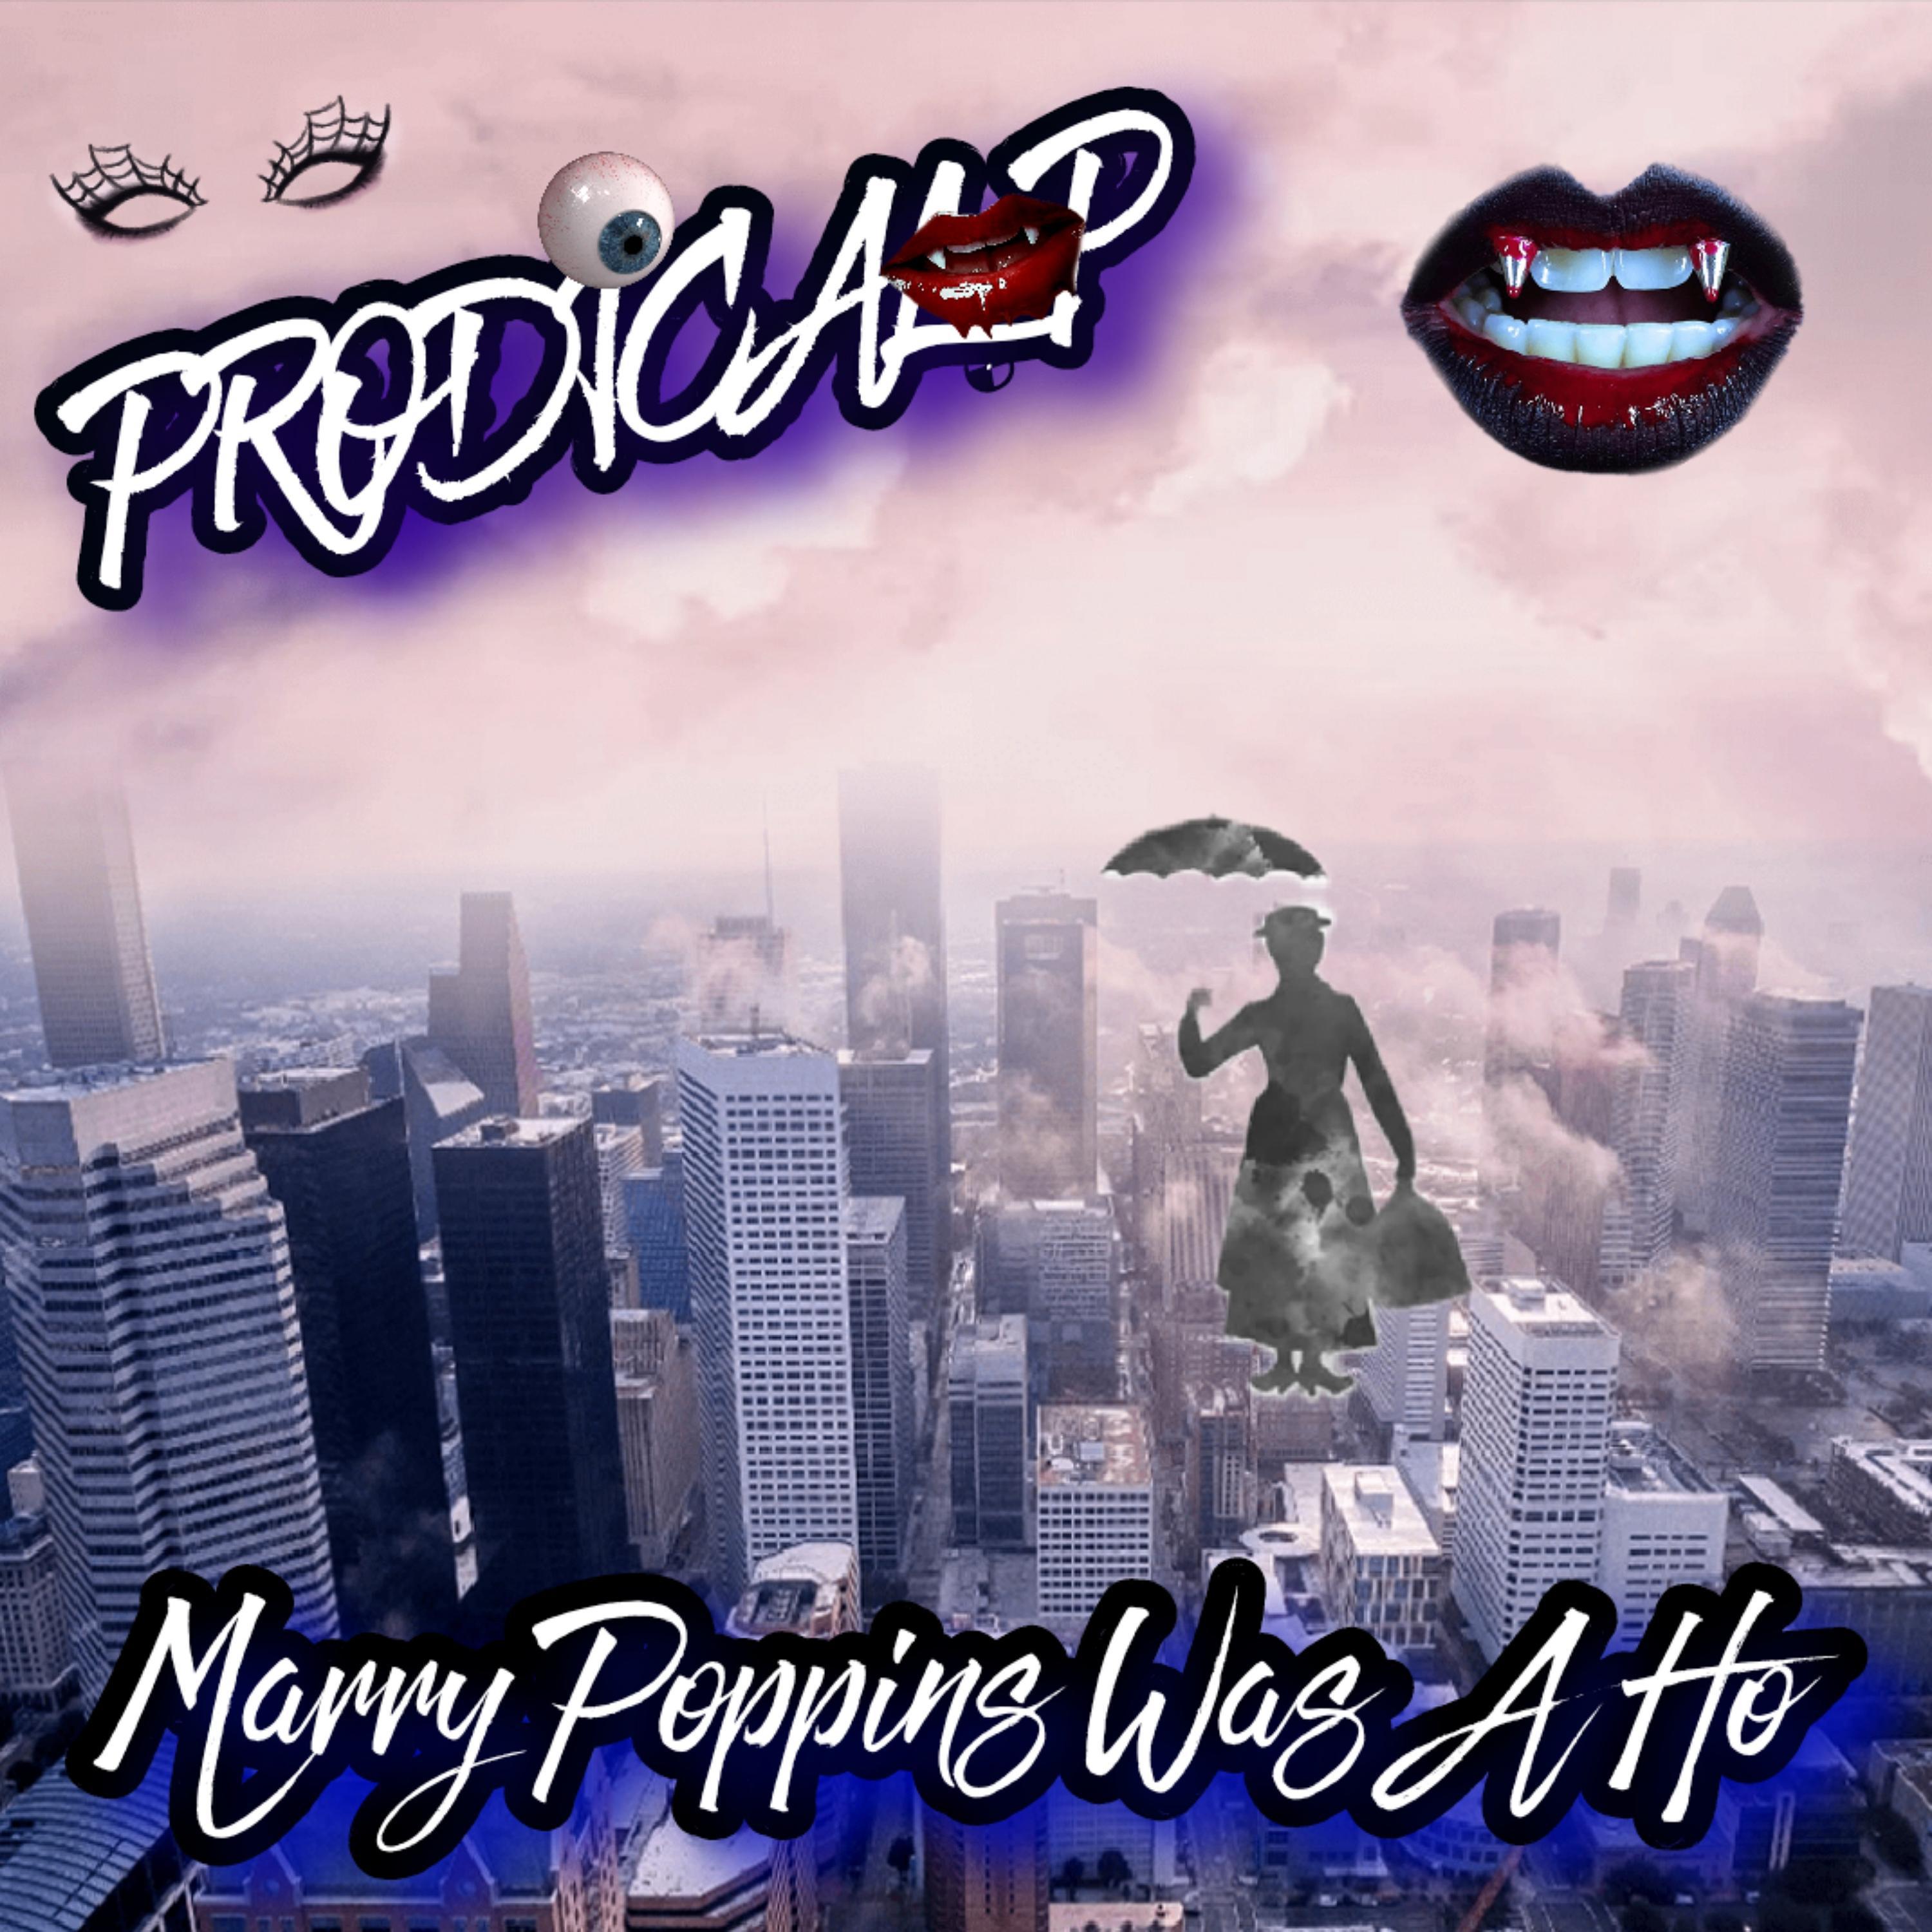 Prodical-P - Selfish Lollypop